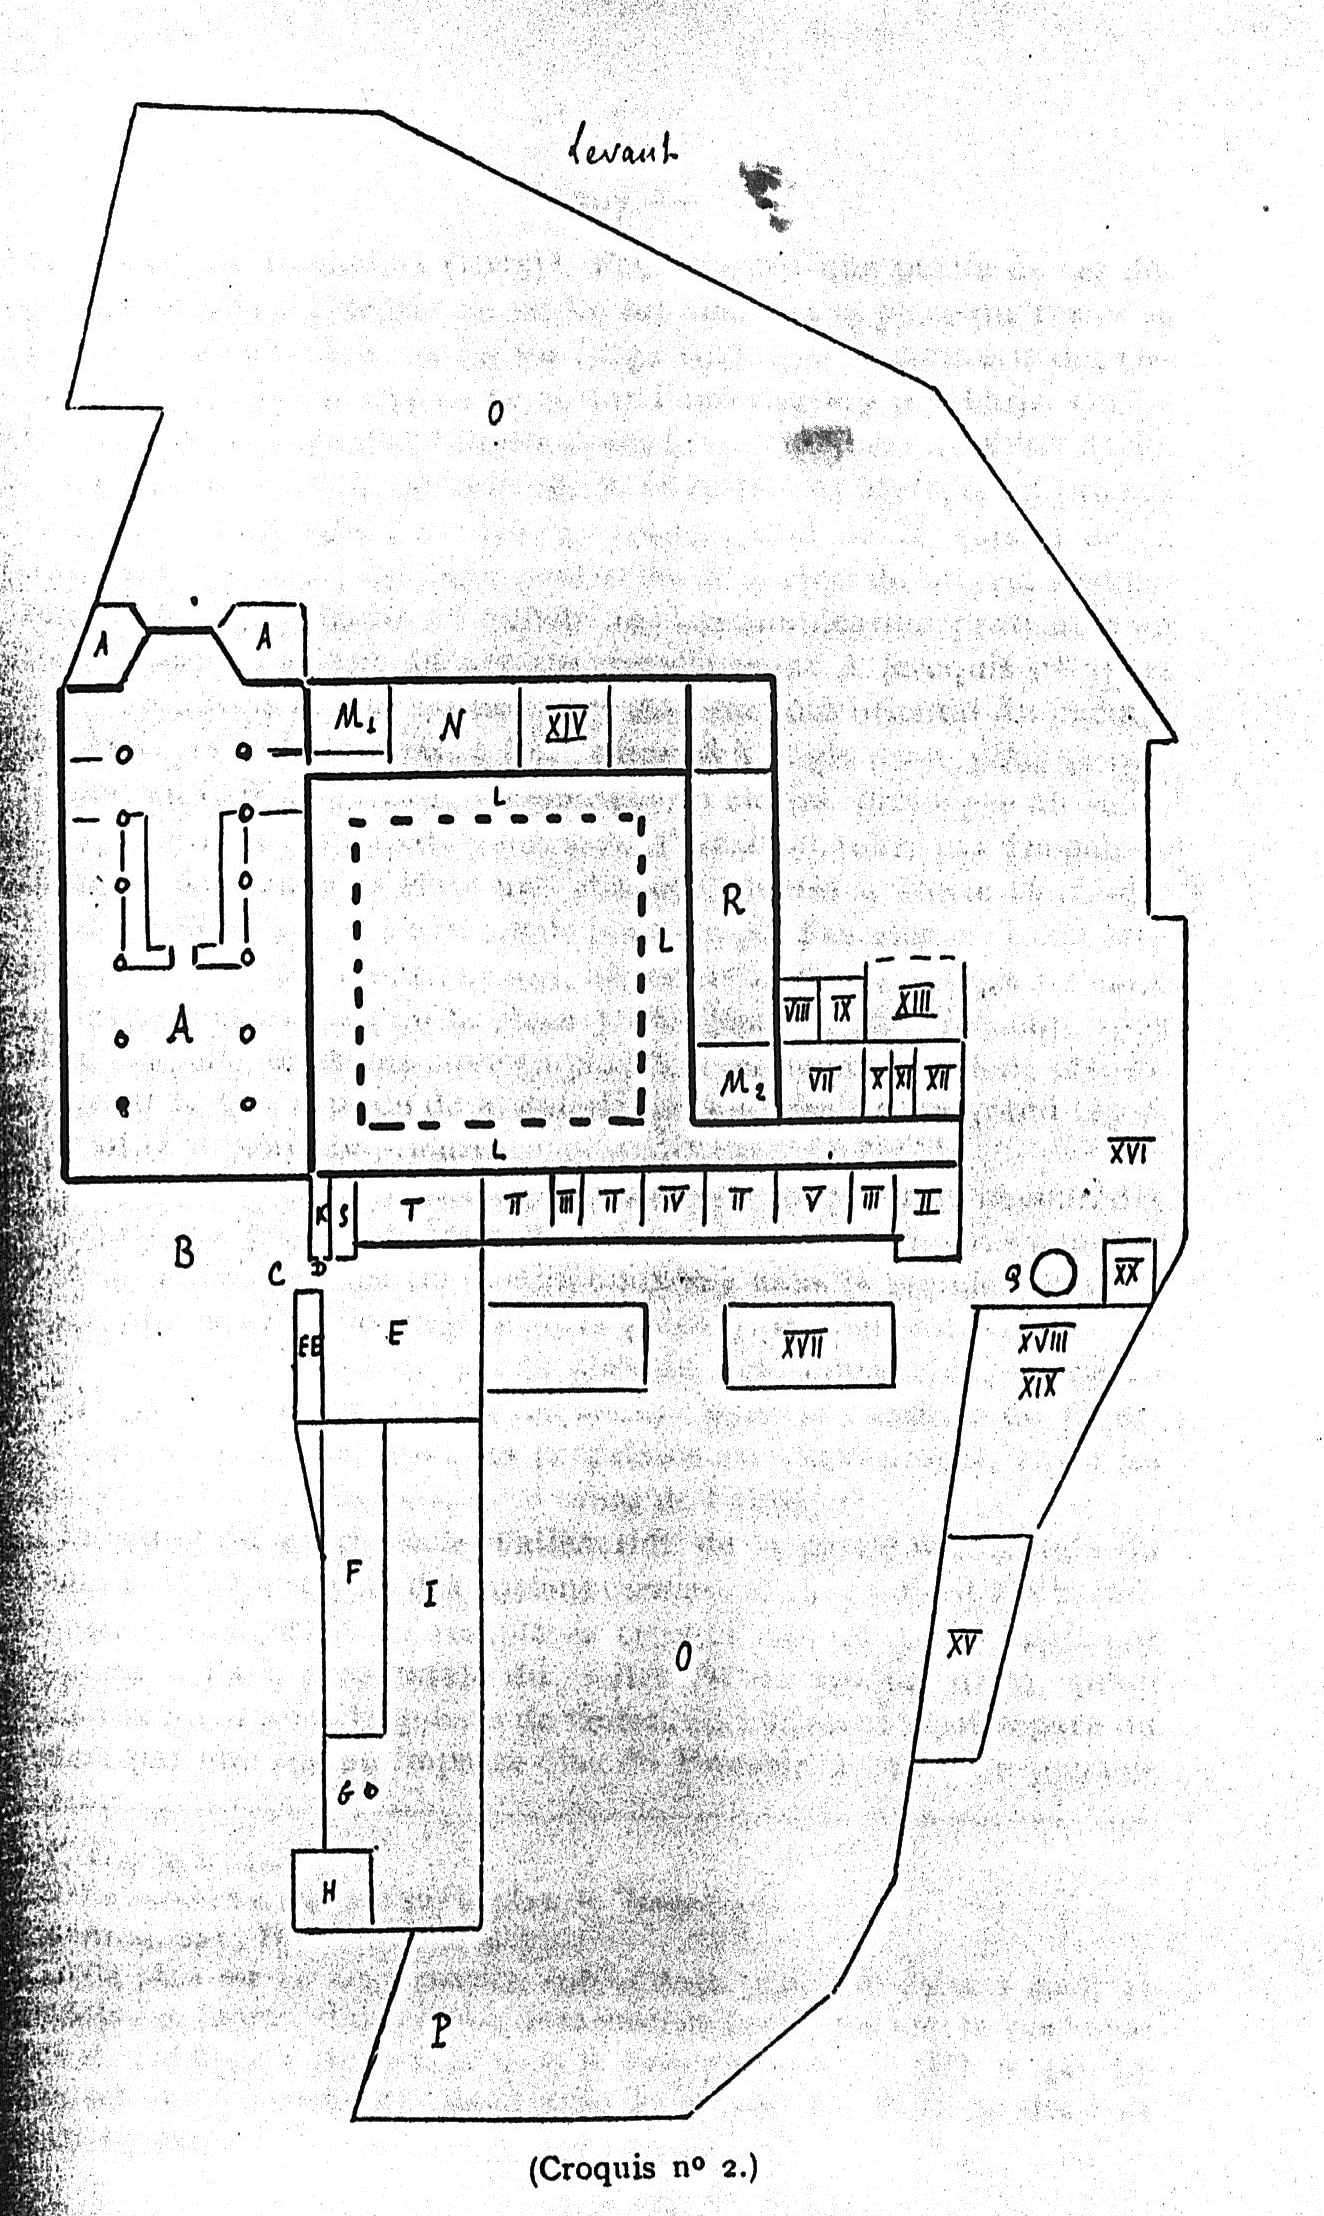 plan of abbey